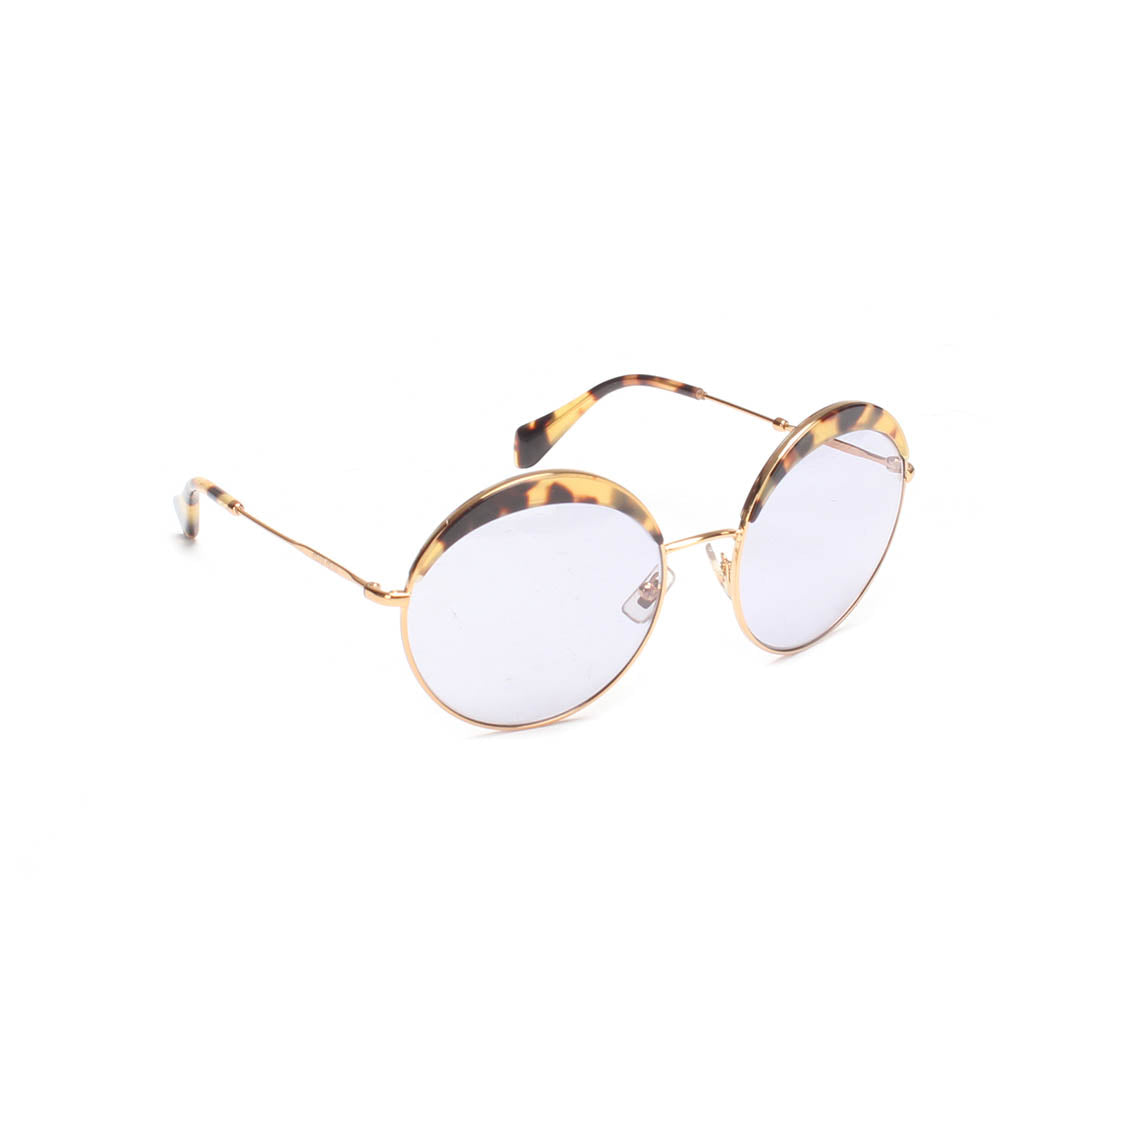 Miu Miu Tortoiseshell Round Sunglasses Metal Sunglasses in Excellent condition